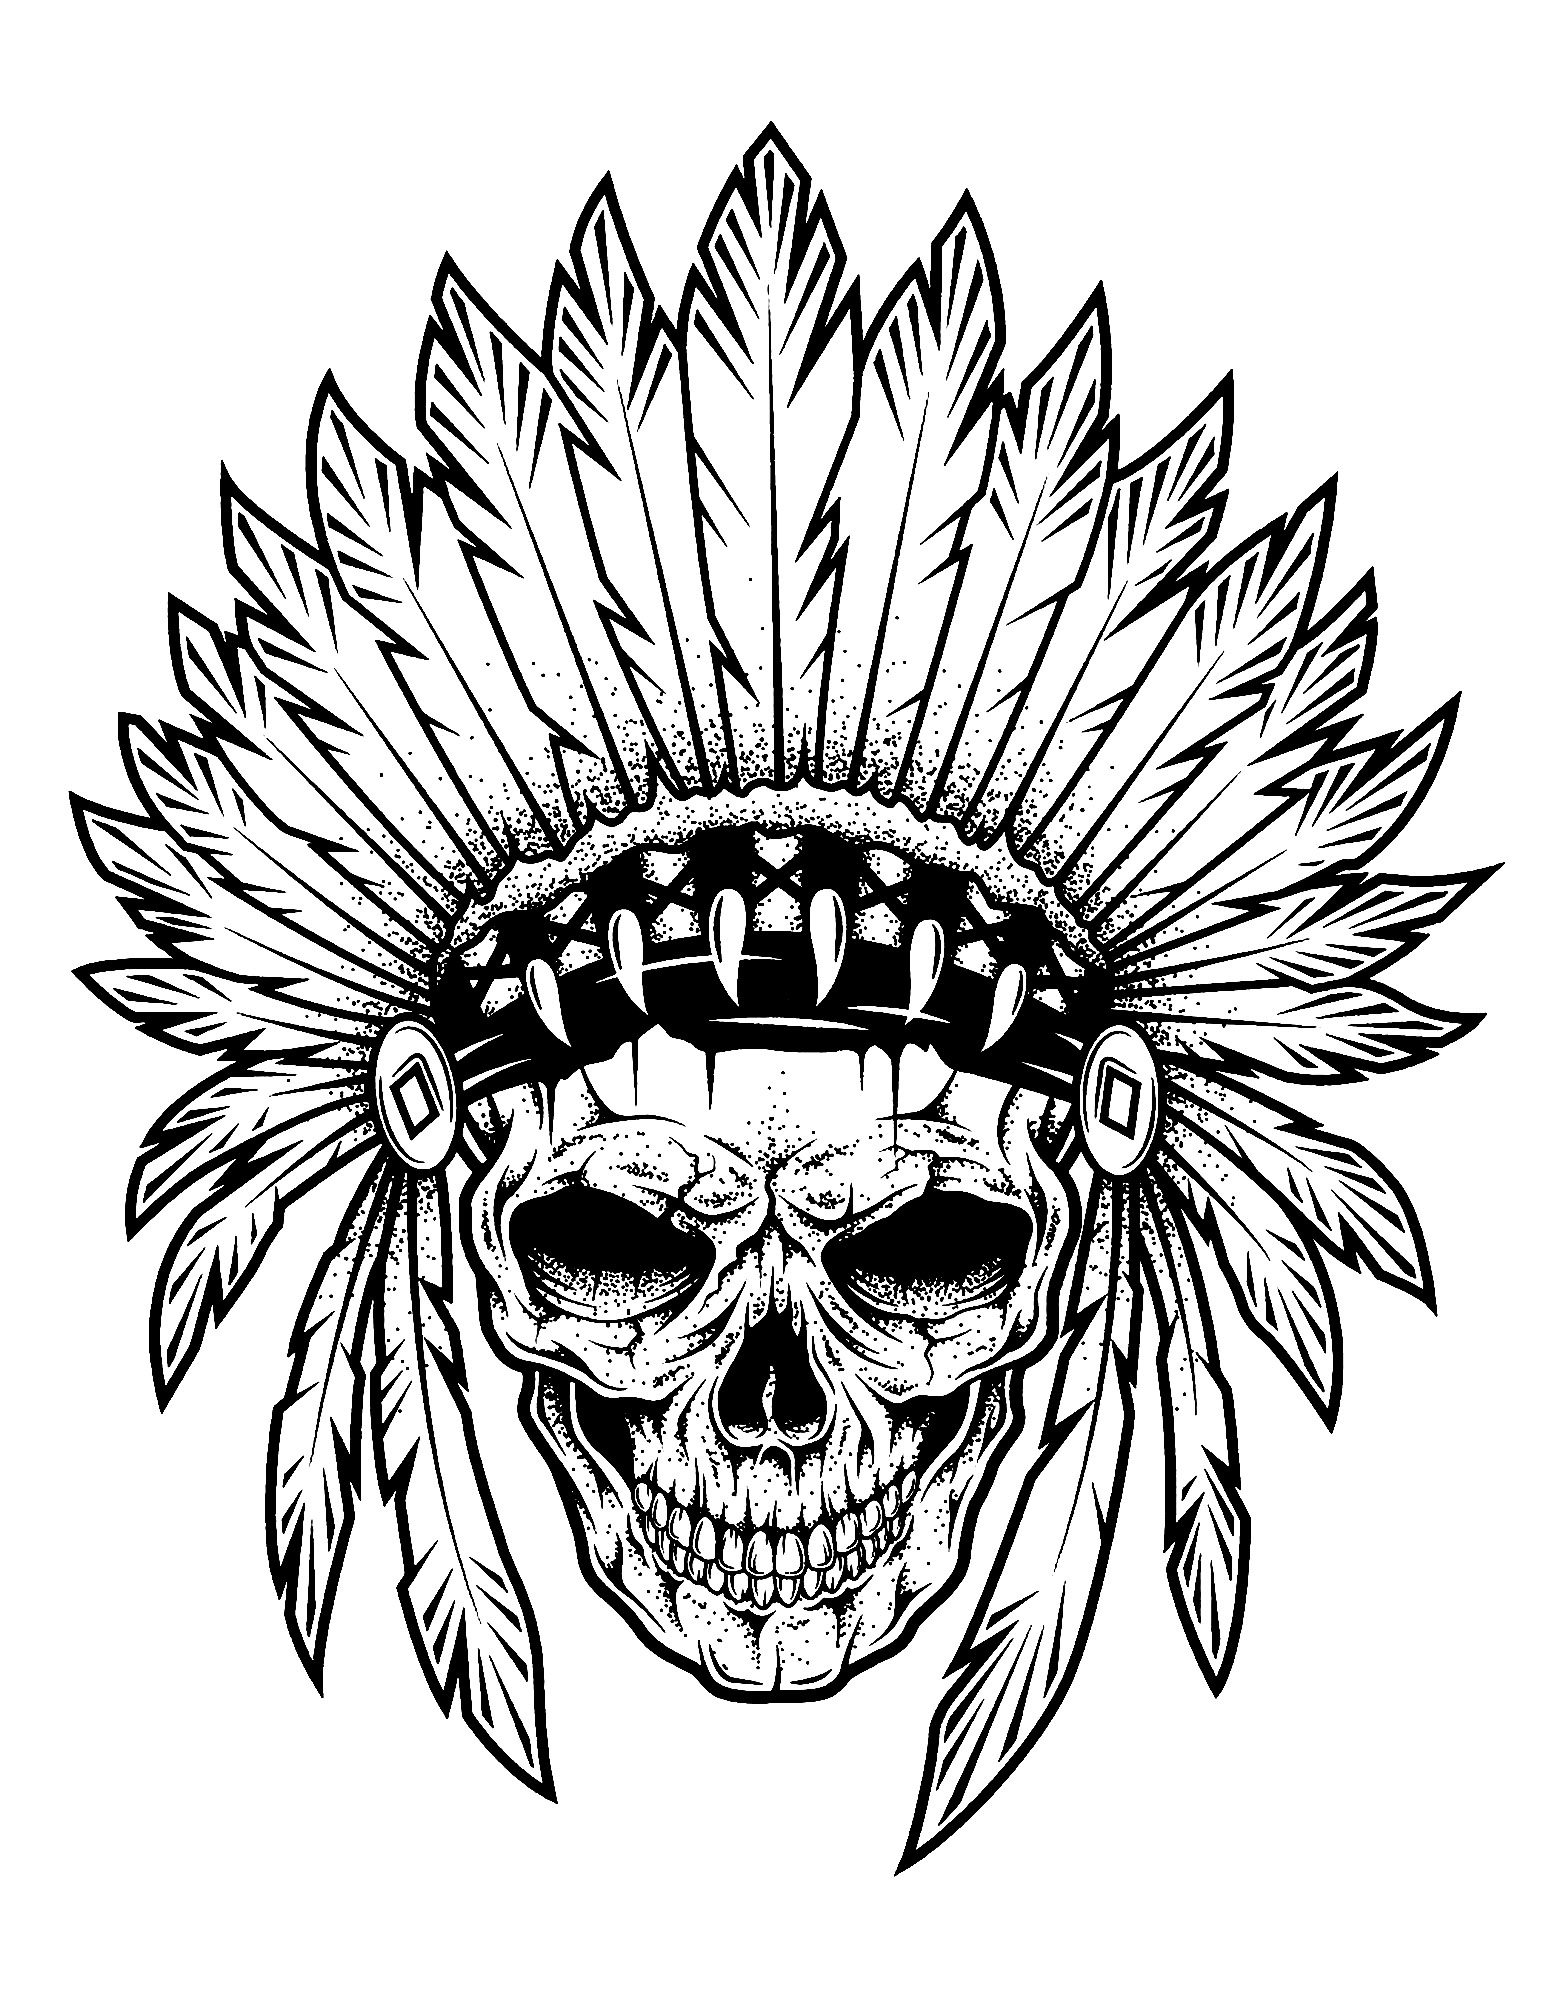 Indian chief skull, perfect for a tattoo, Source : 123rf   Artist : makstrv